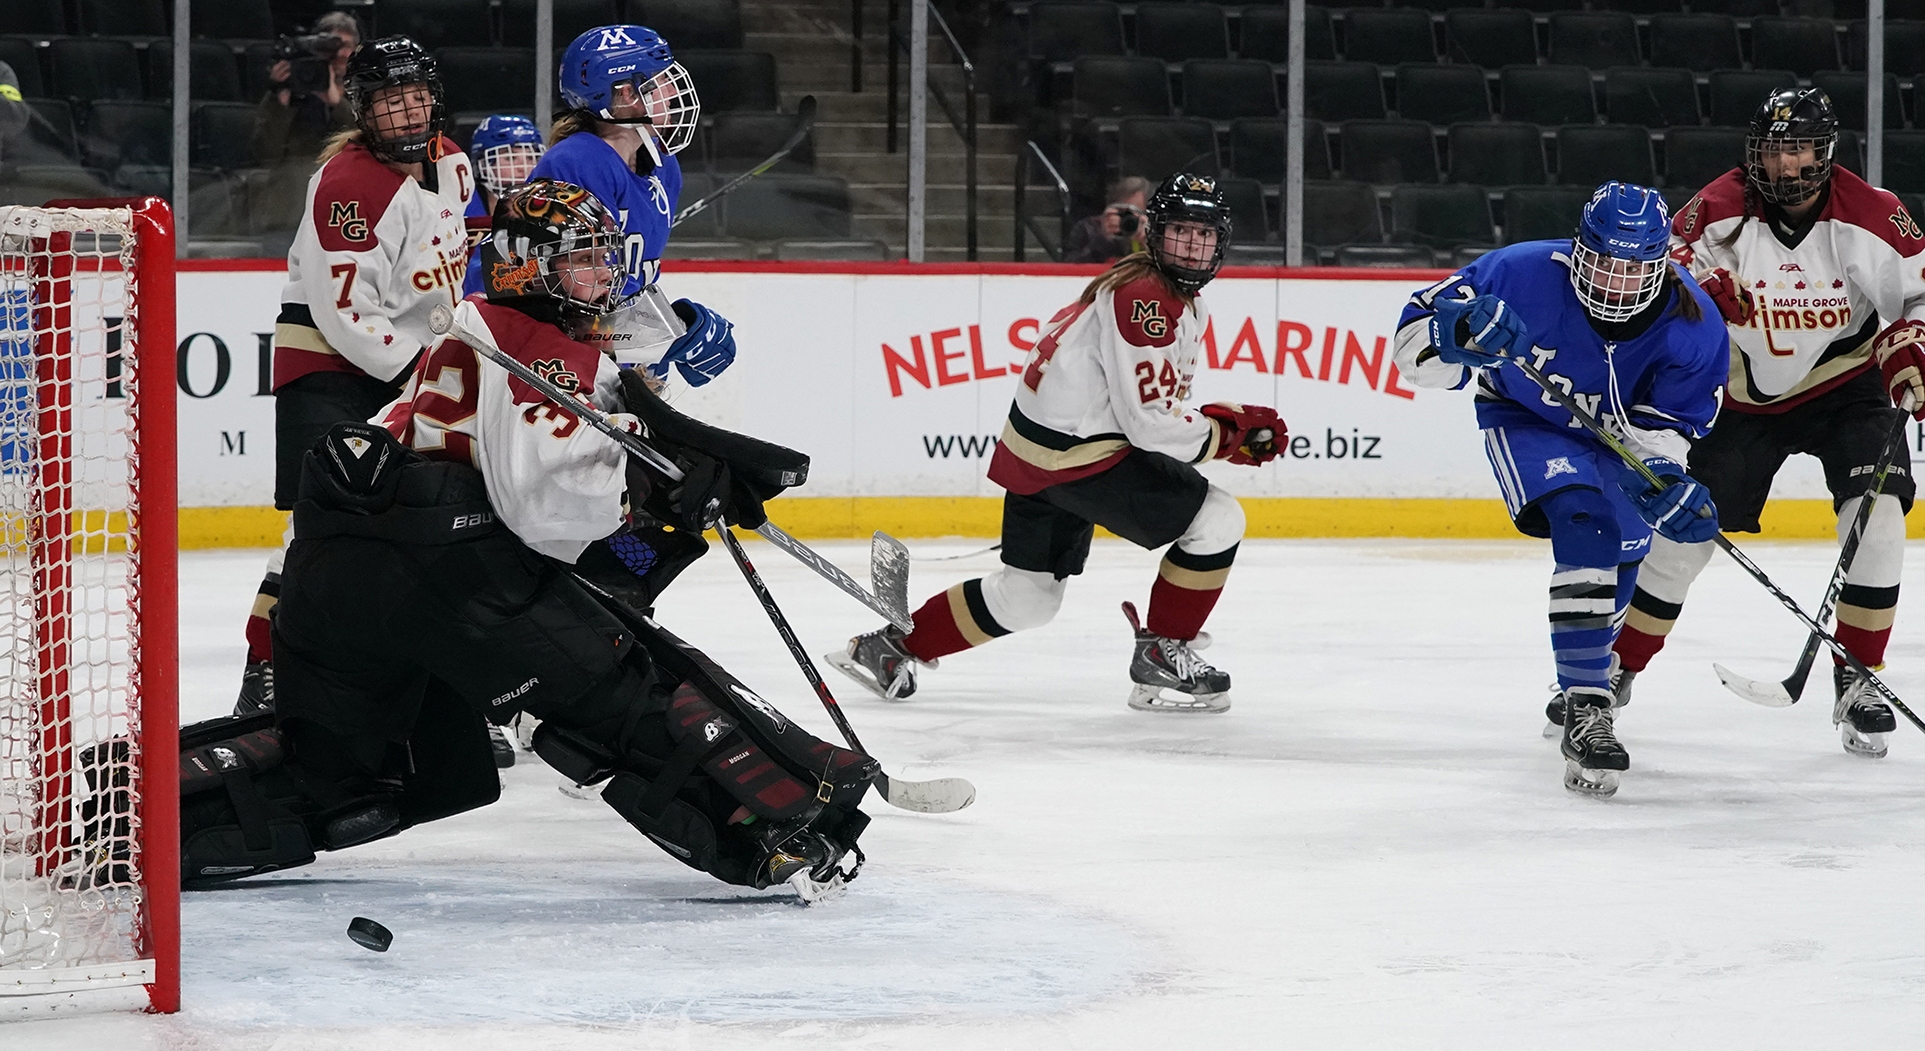 2019-02-21 MTKA Girls Hockey at Maple Grove RSO01026 1.6 MB